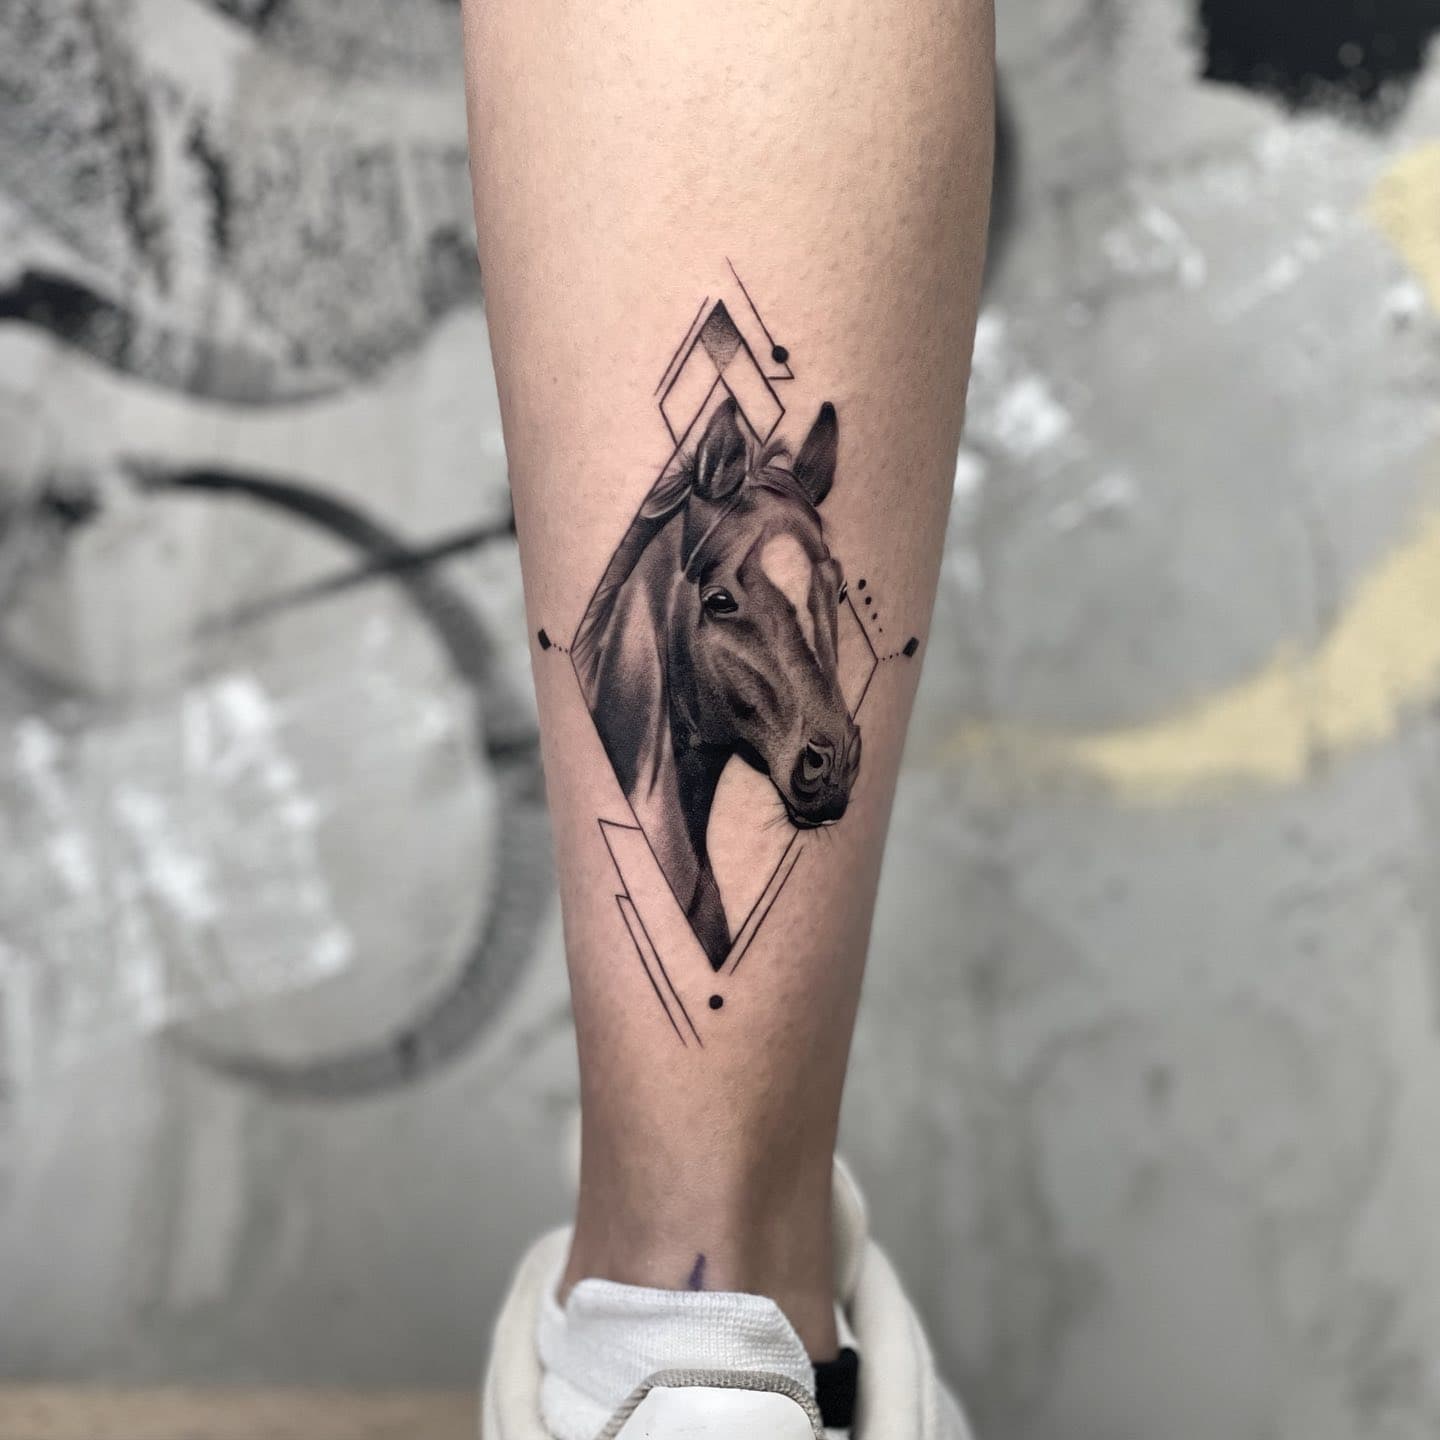 Tatuaje de caballo pequeño sobre la pierna